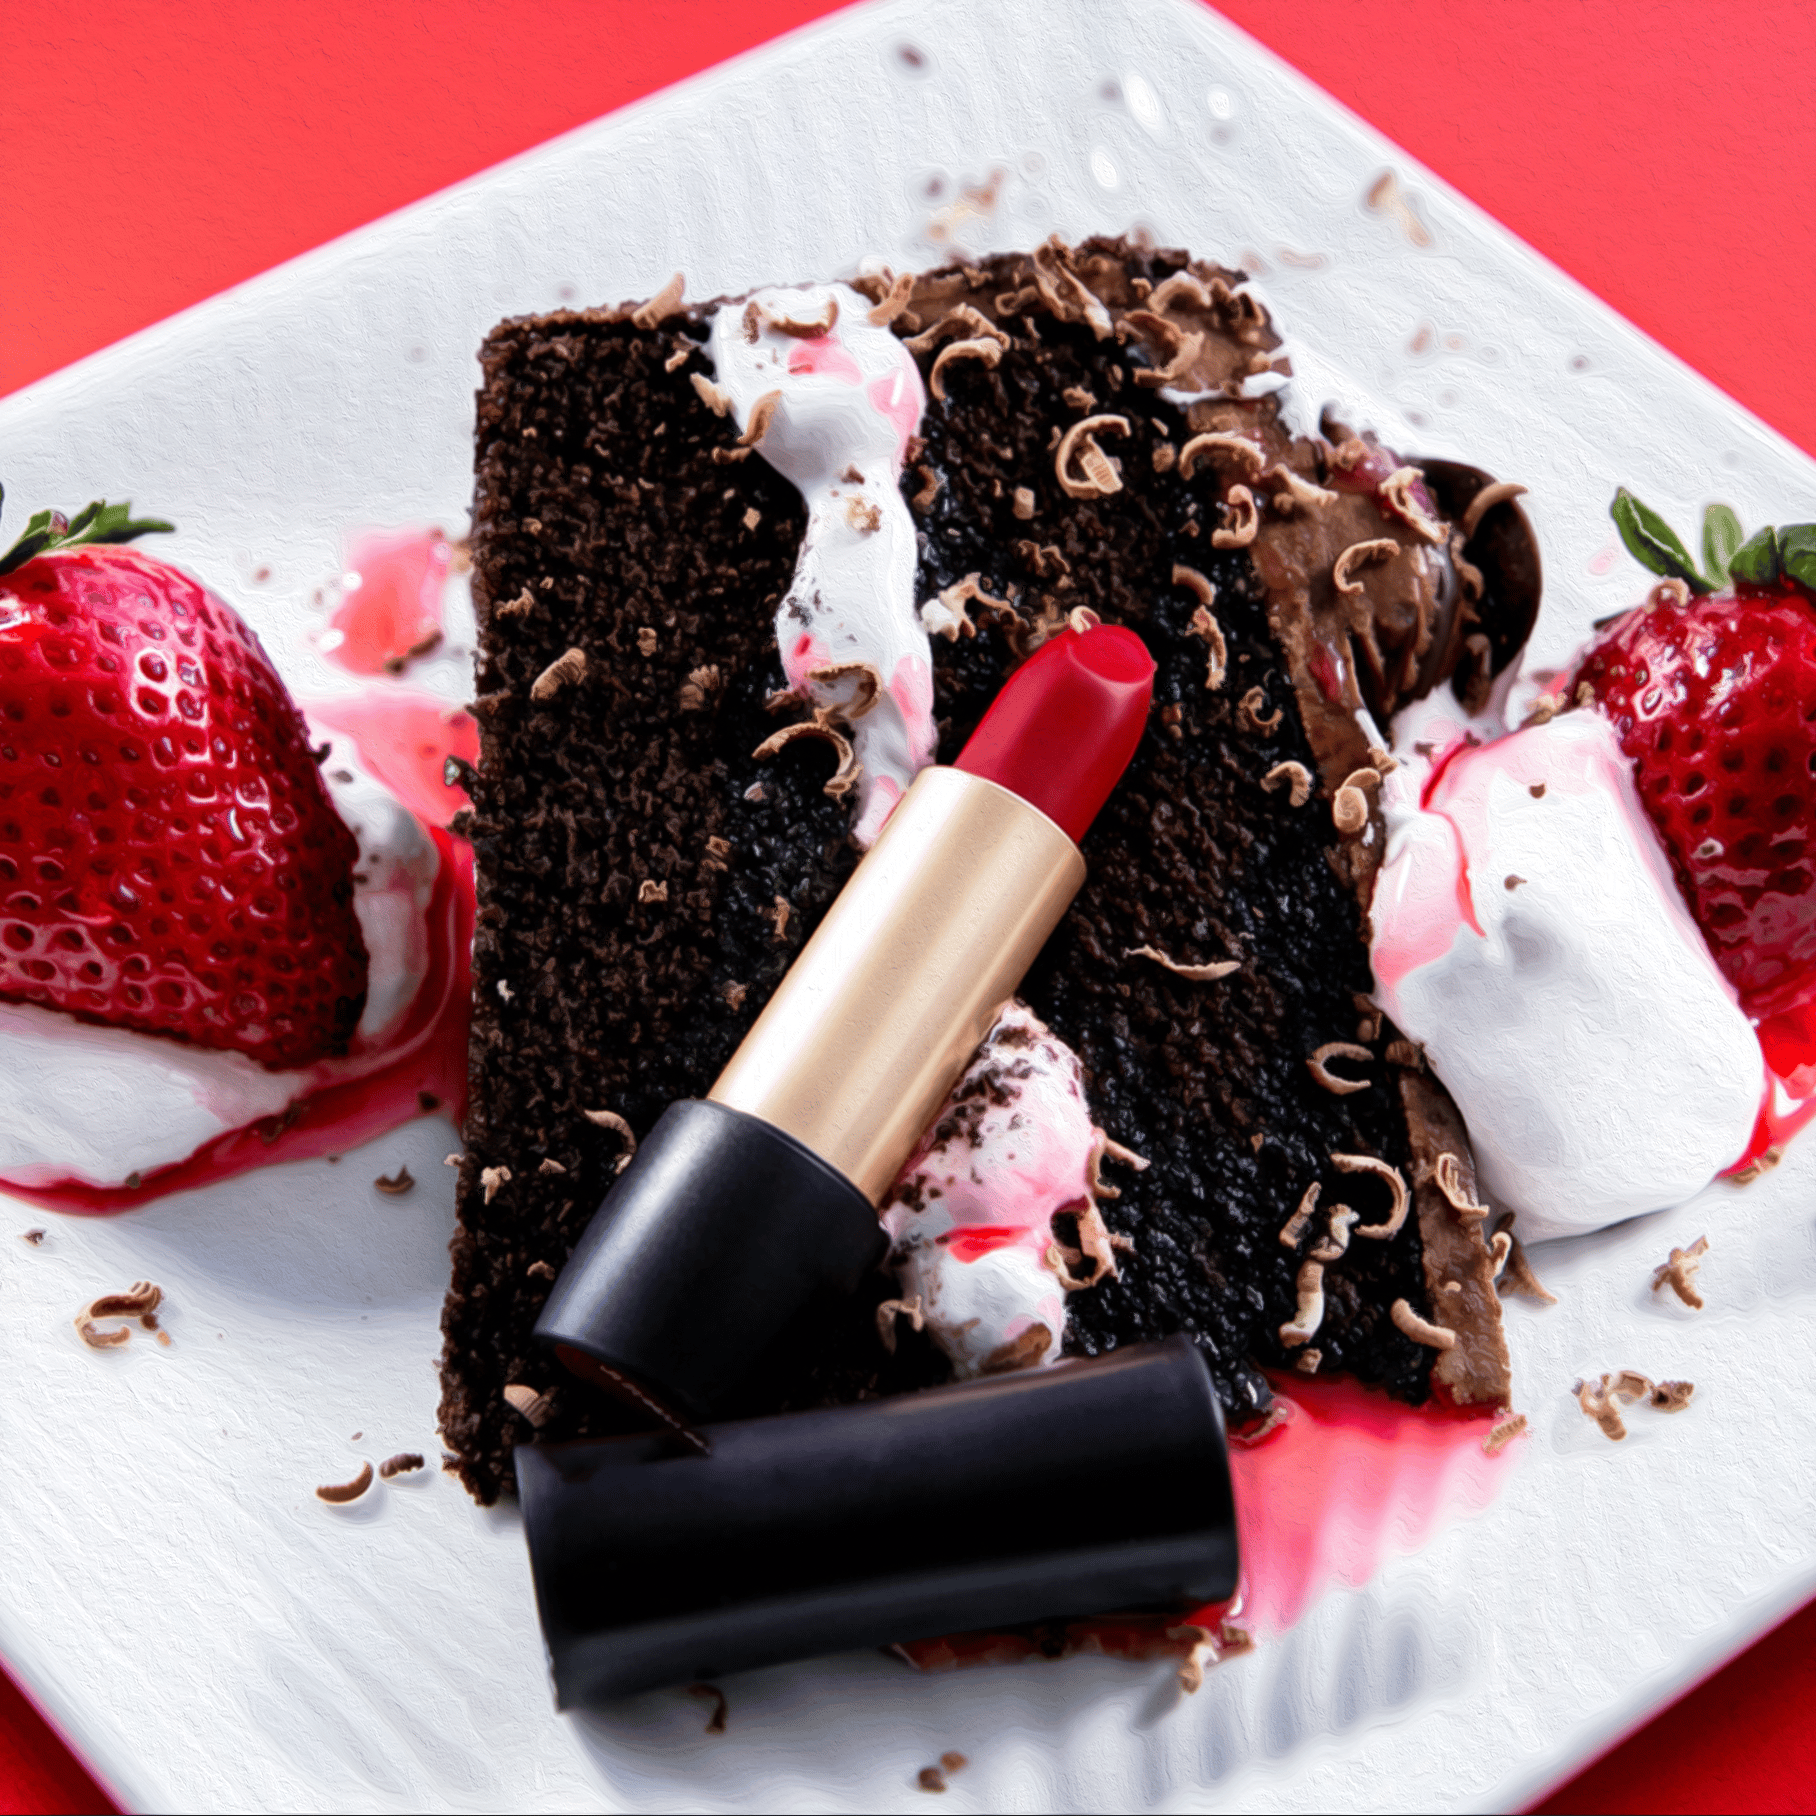 lipstick on chocolate cake with strawberries